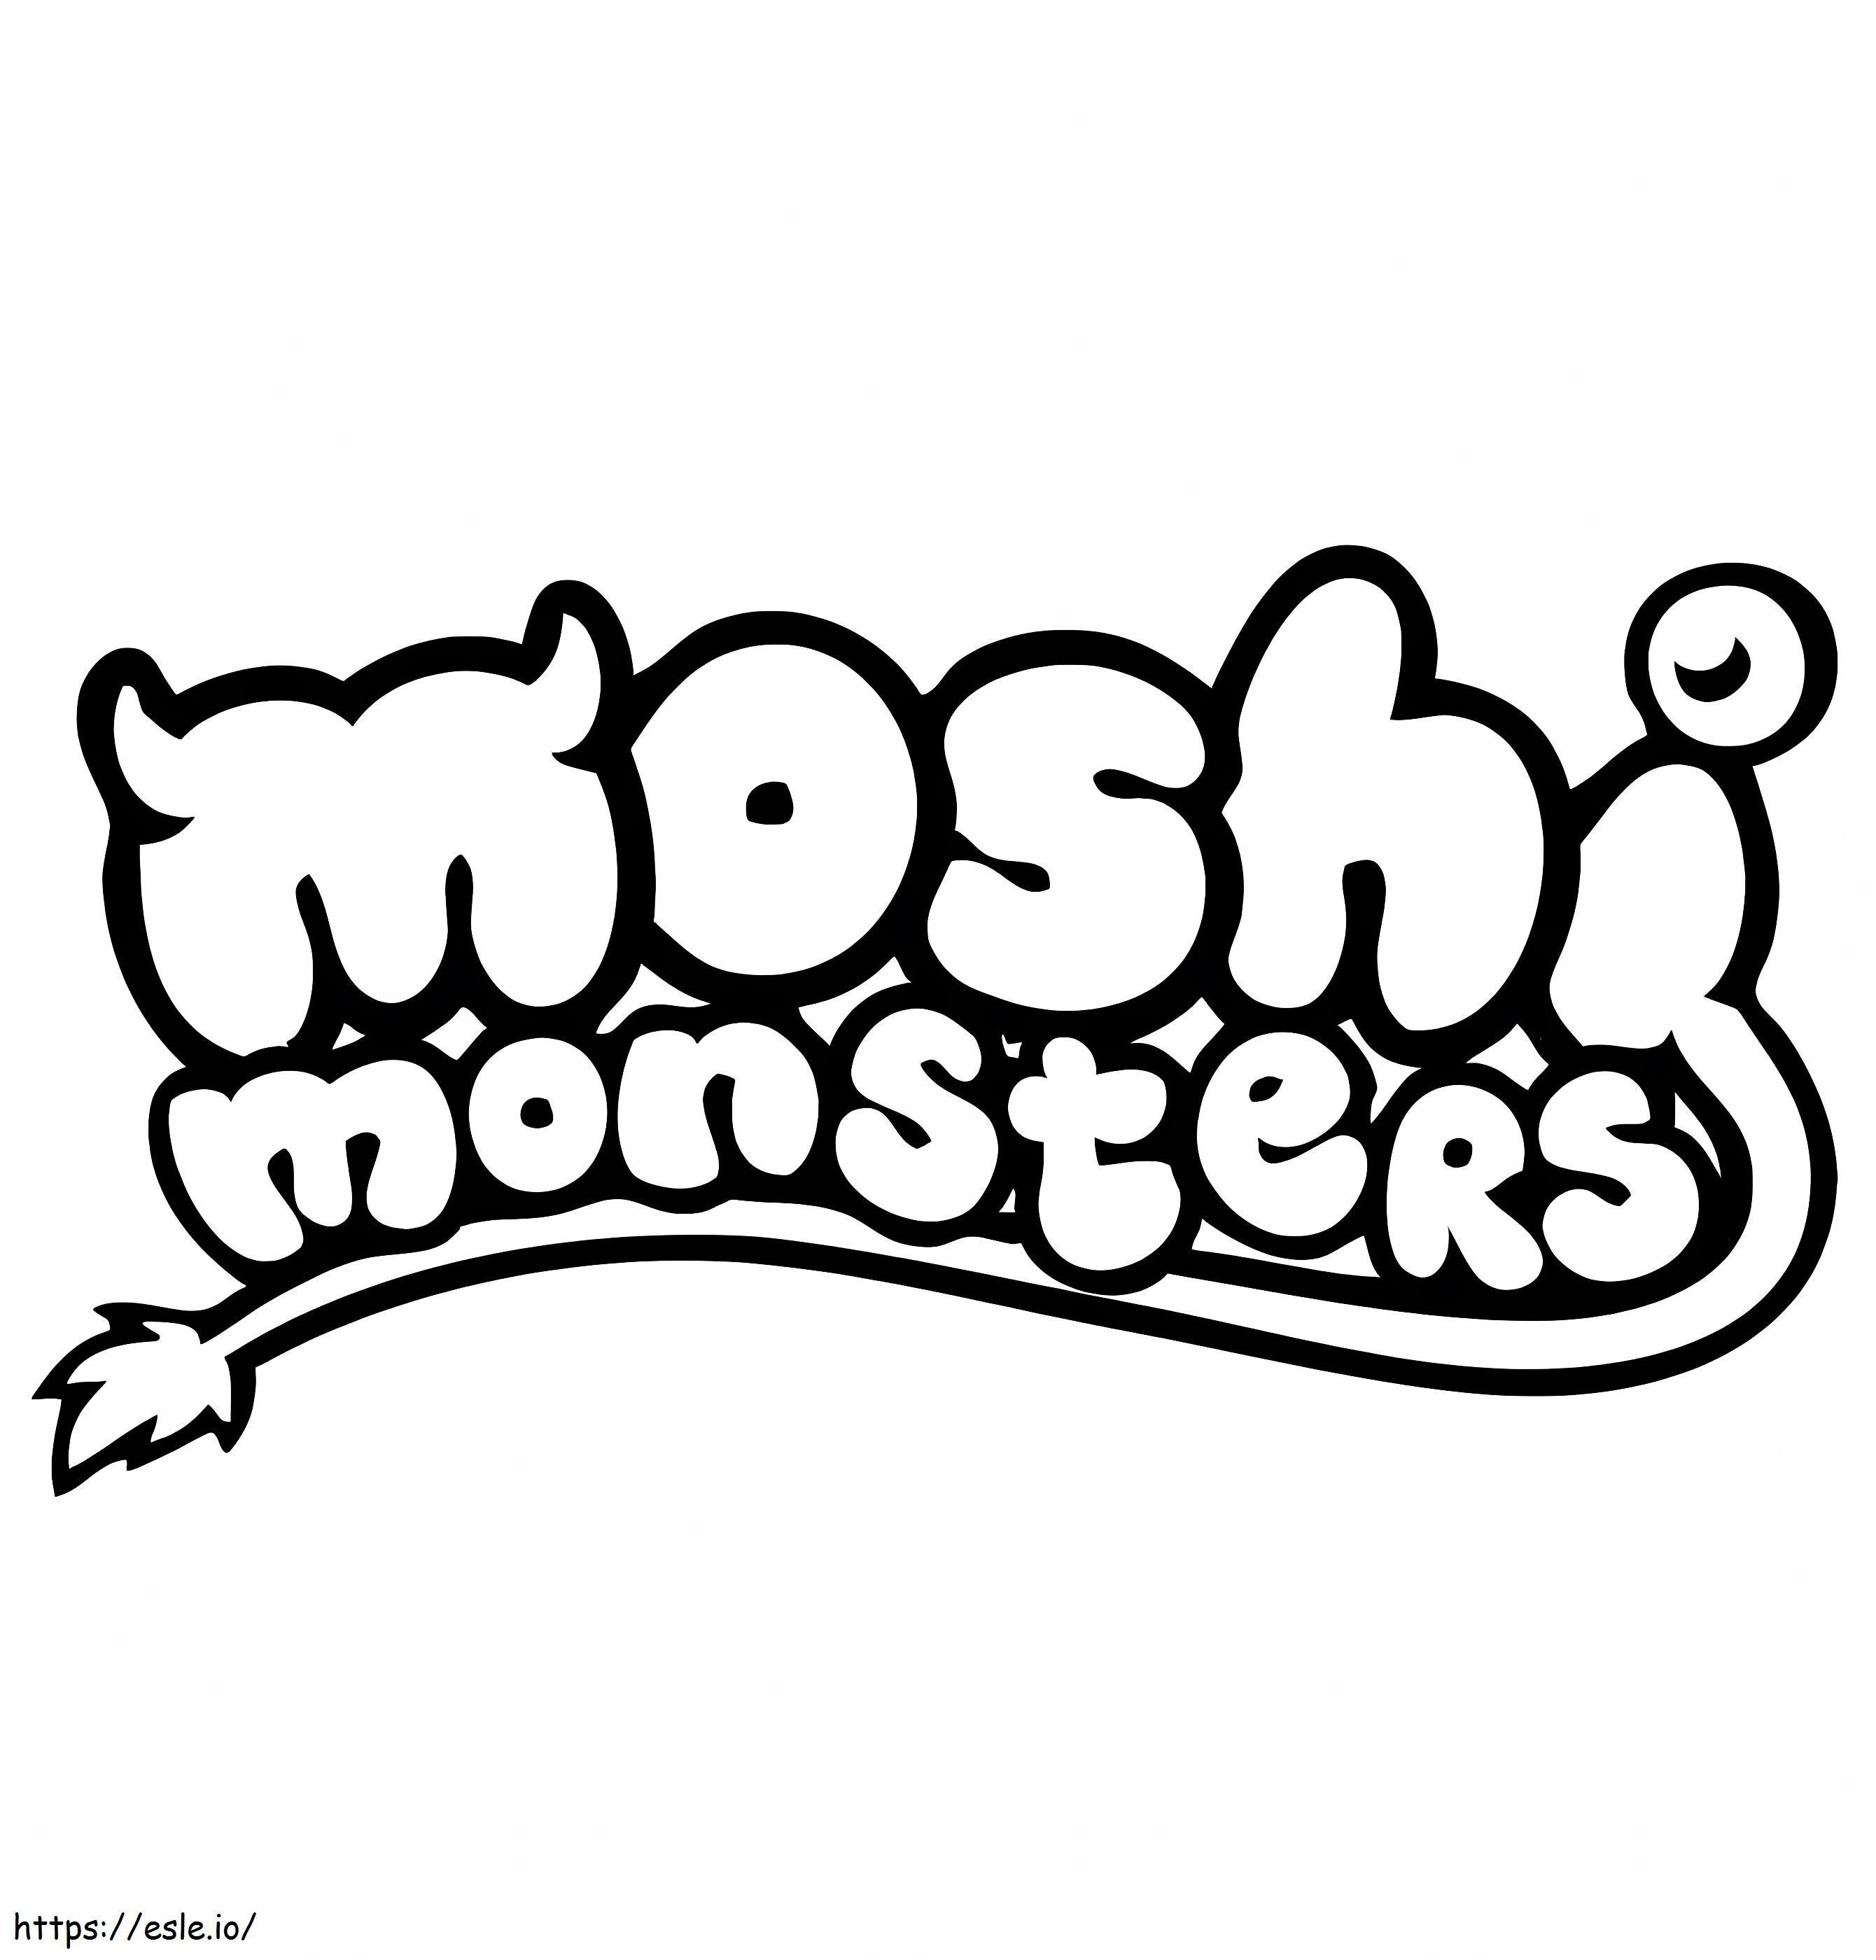 Logo Moshi Potwory kolorowanka